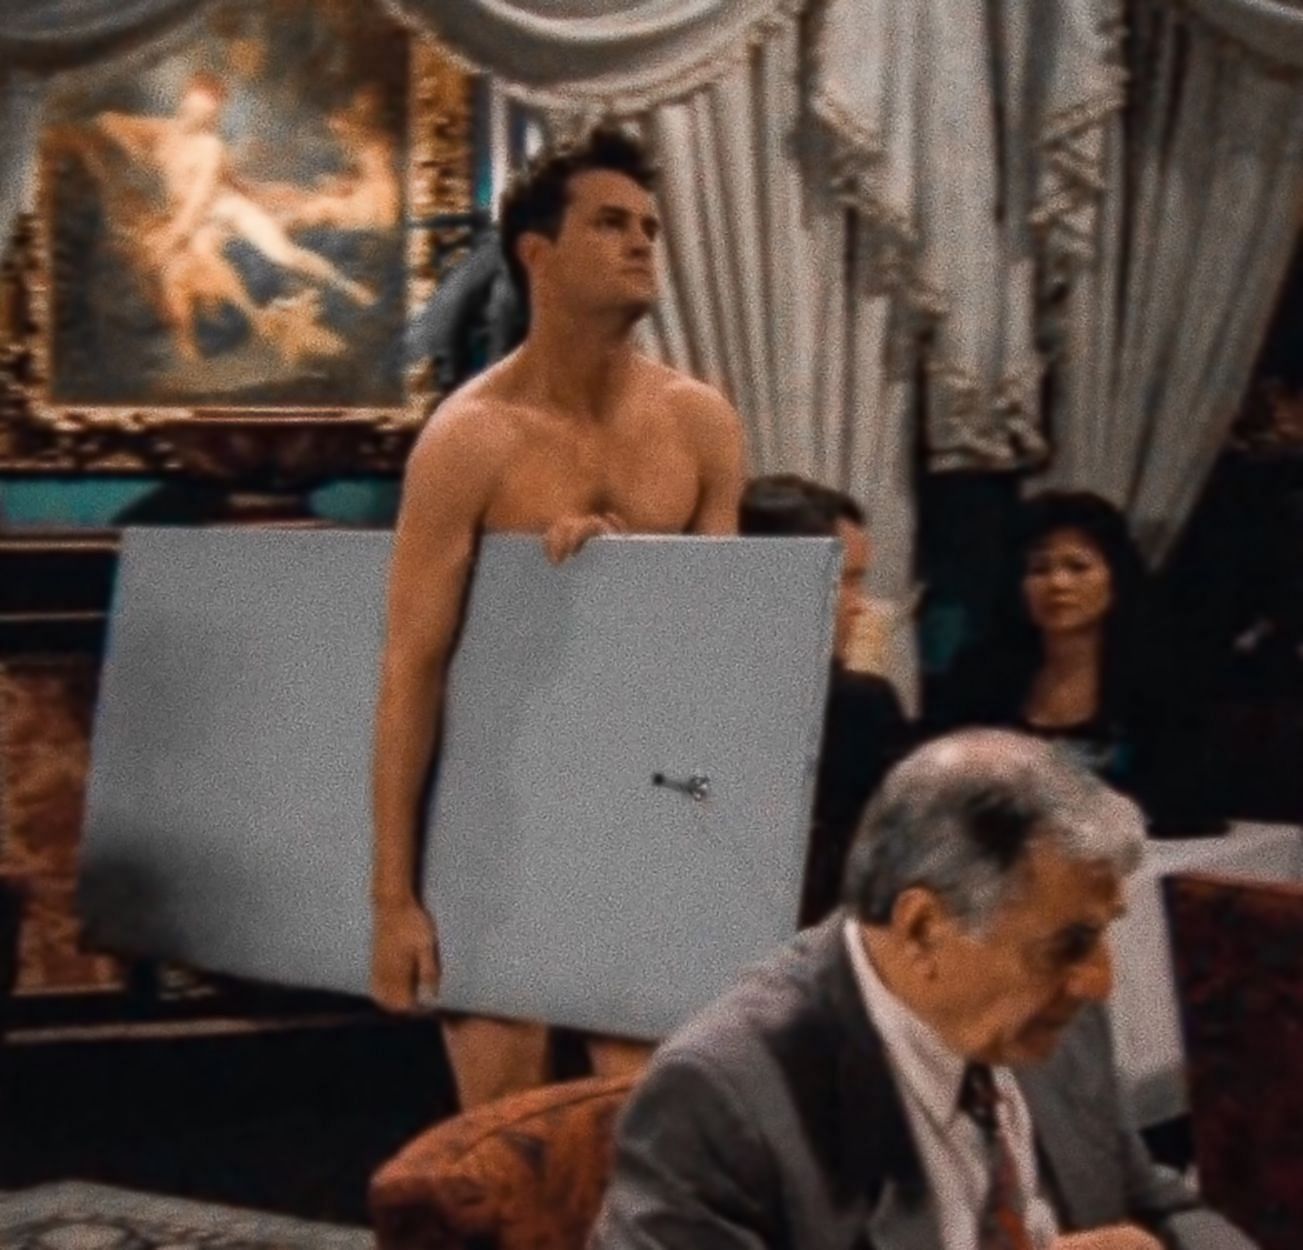 Chandler leaving the restaurant in underwear (Image via NBC)